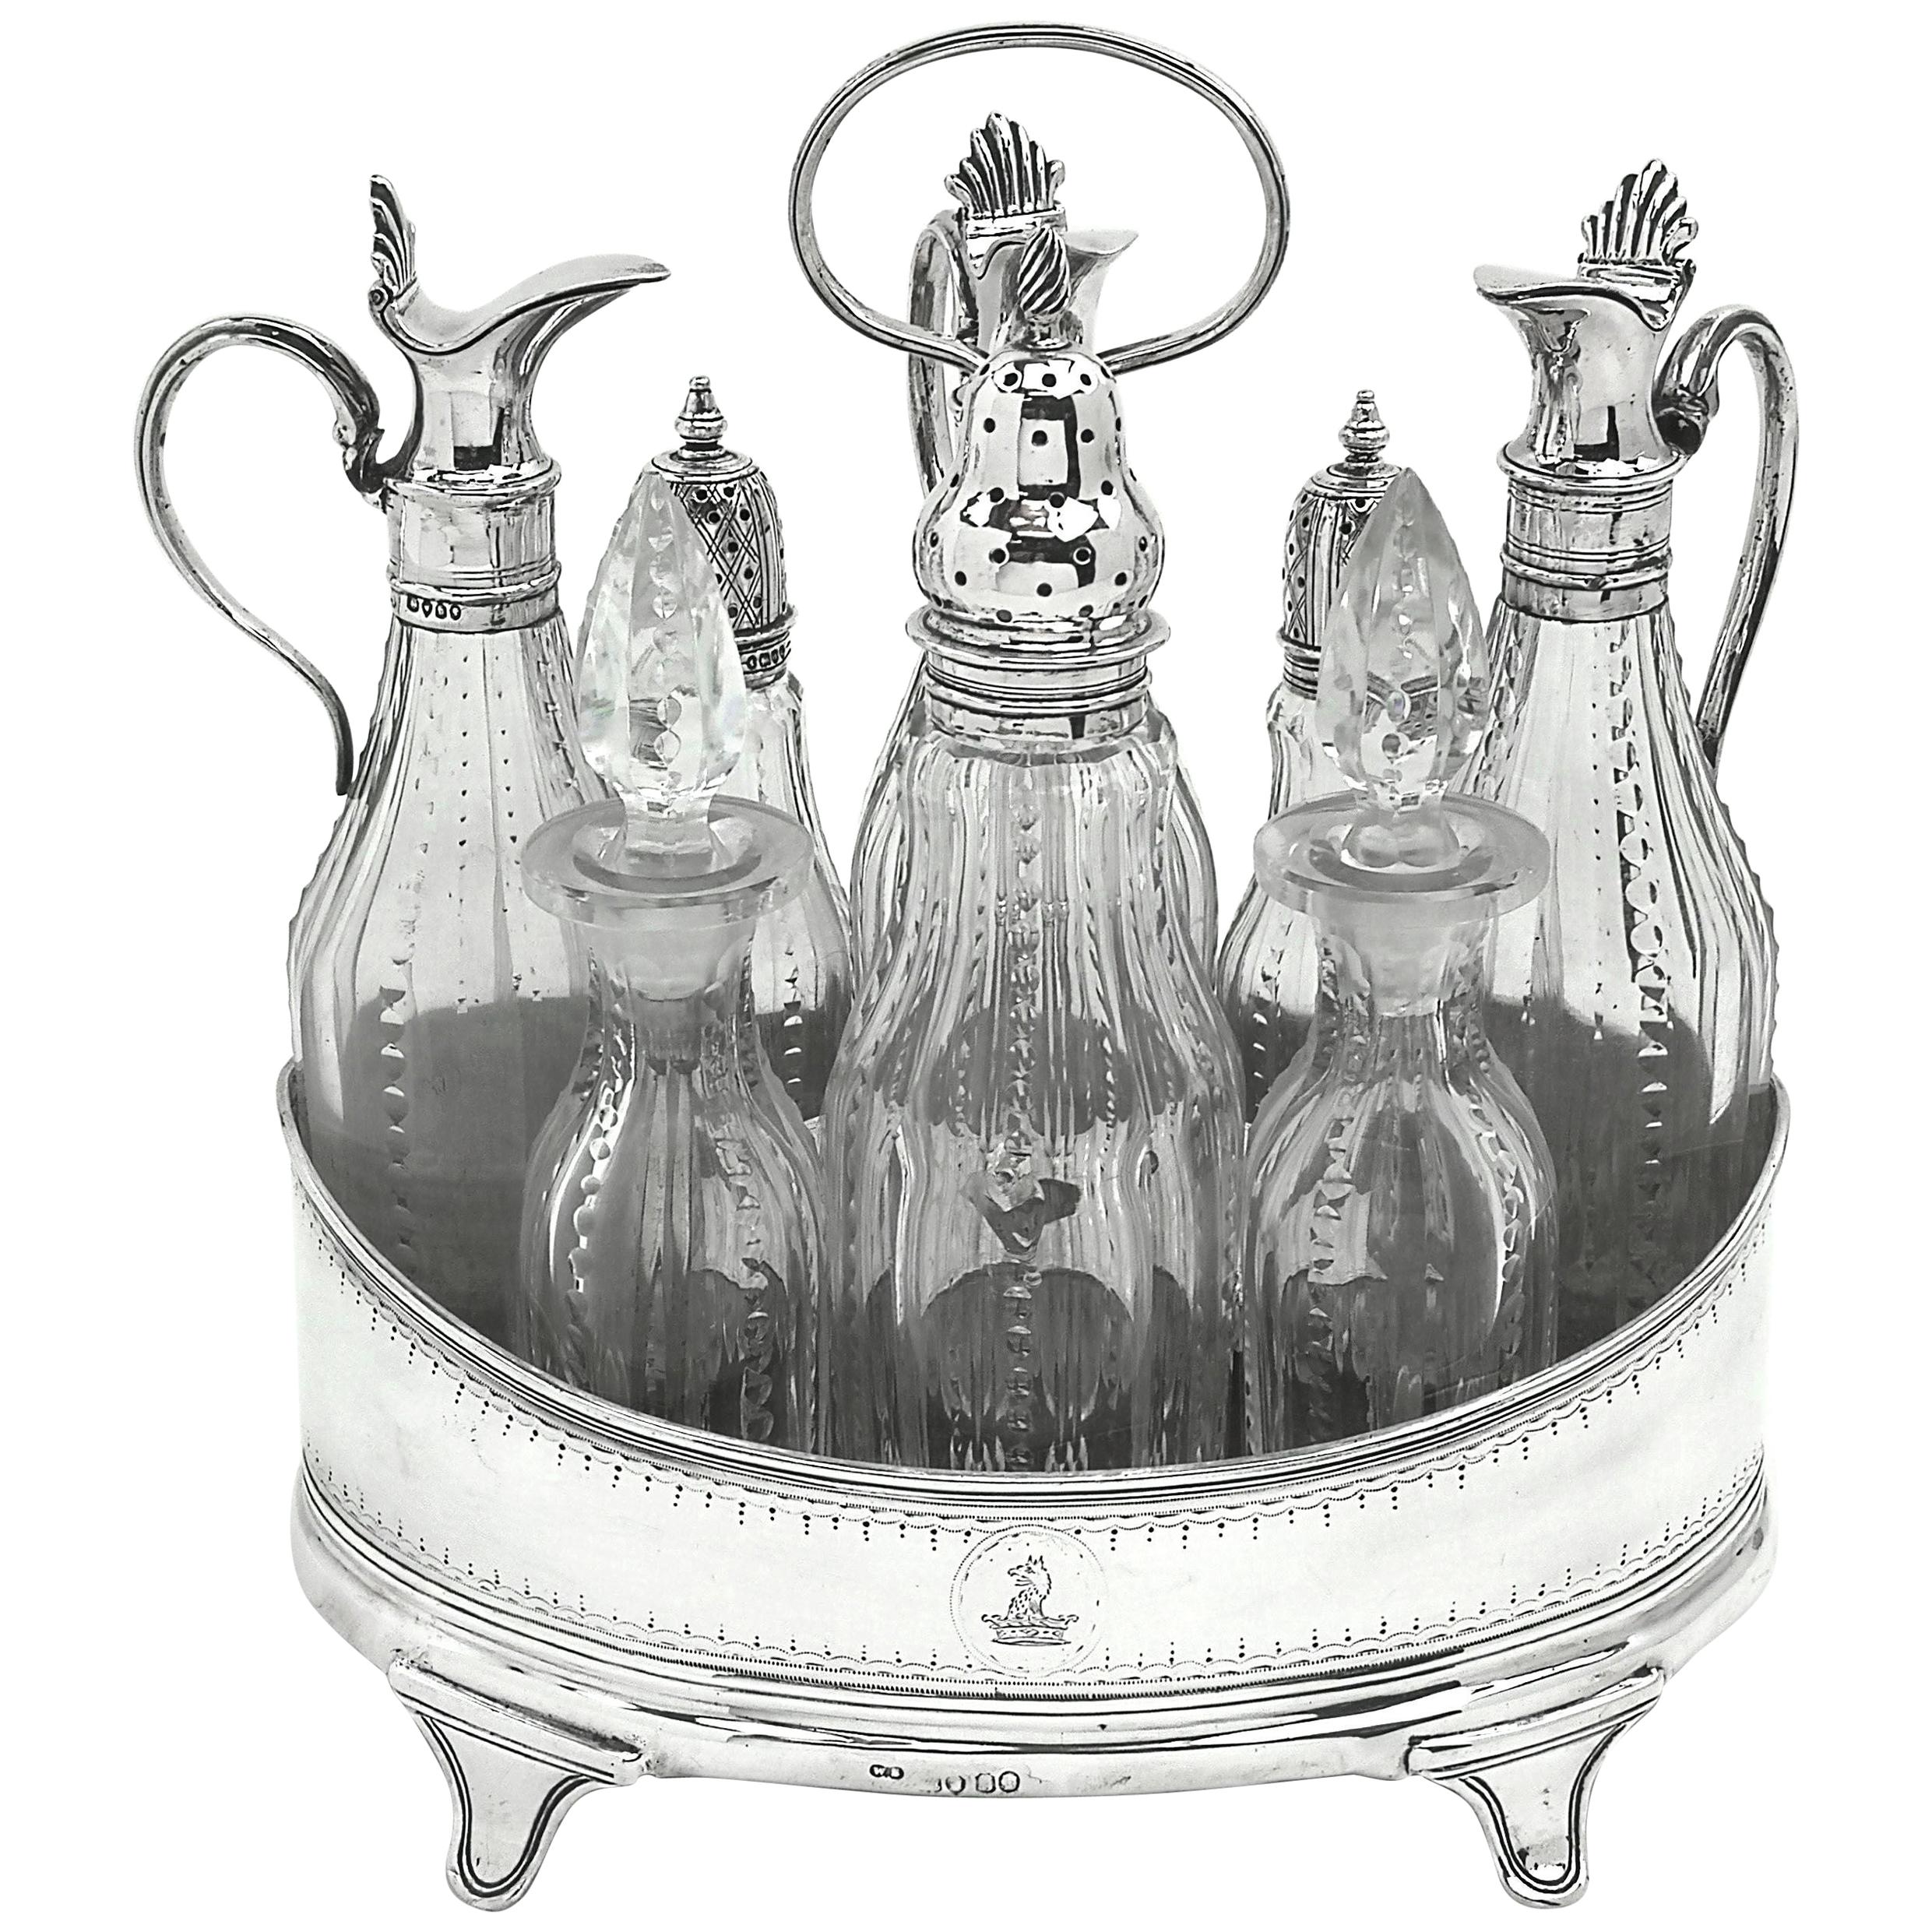 Antique Victorian Sterling Silver Cruet Set / Cruet Stand with Condiment 1860